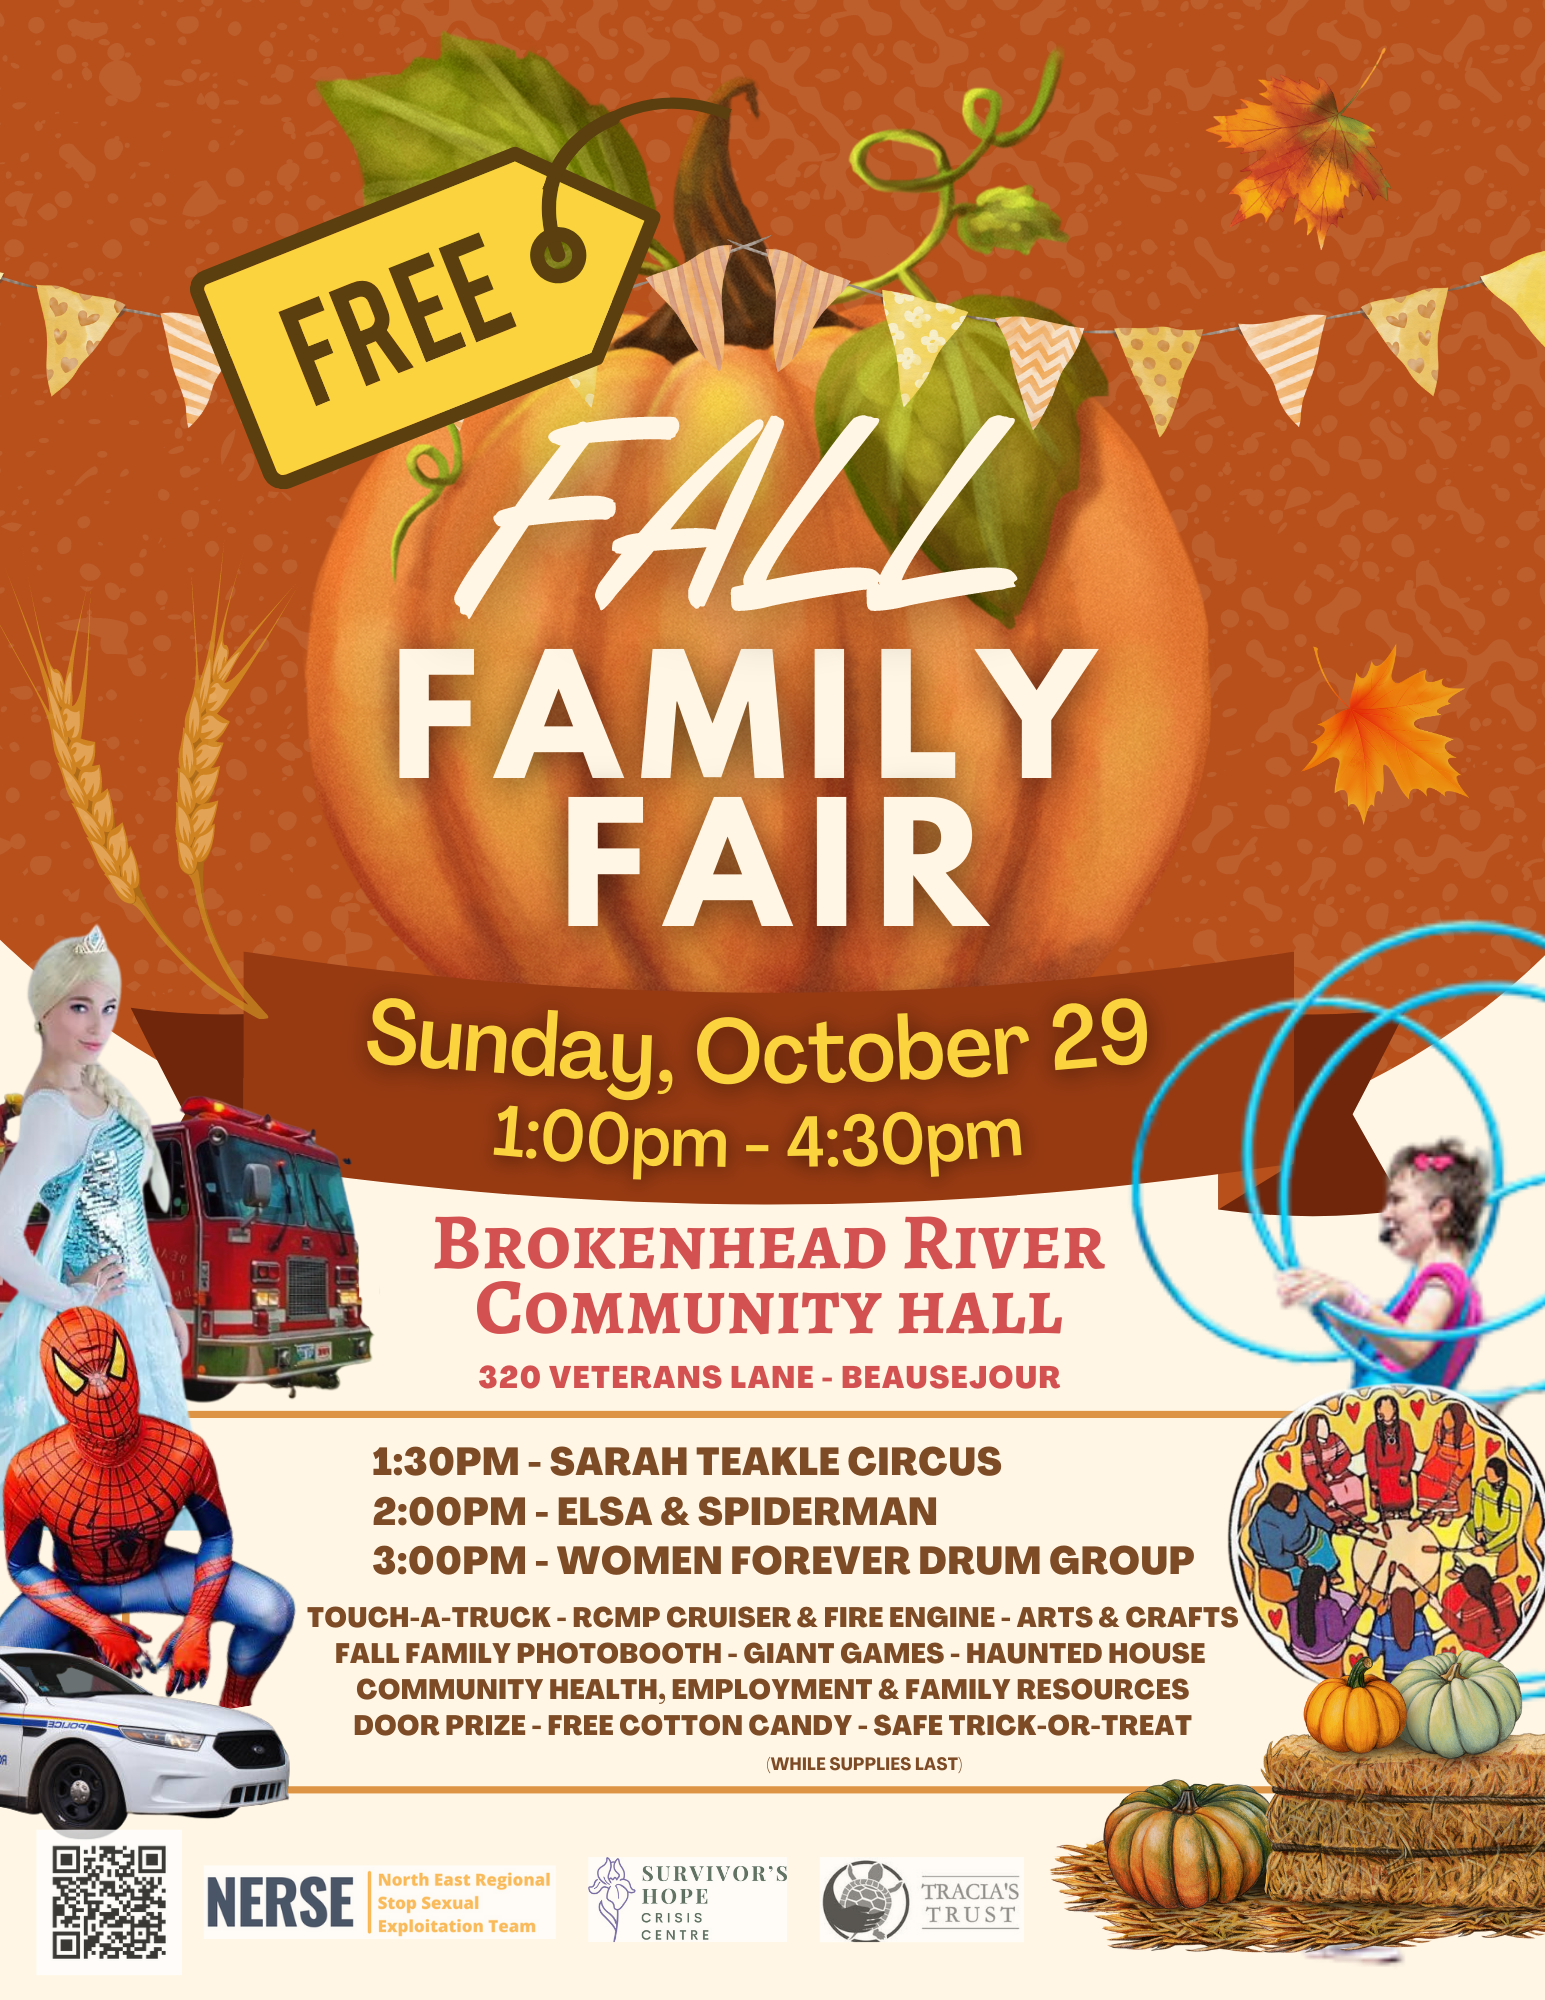 Free Fall Family Fair - October 29th 1:00 - 4:30pm.  Brokenhead River Community Hall. 320 Veterans Lane - Beausejour. 